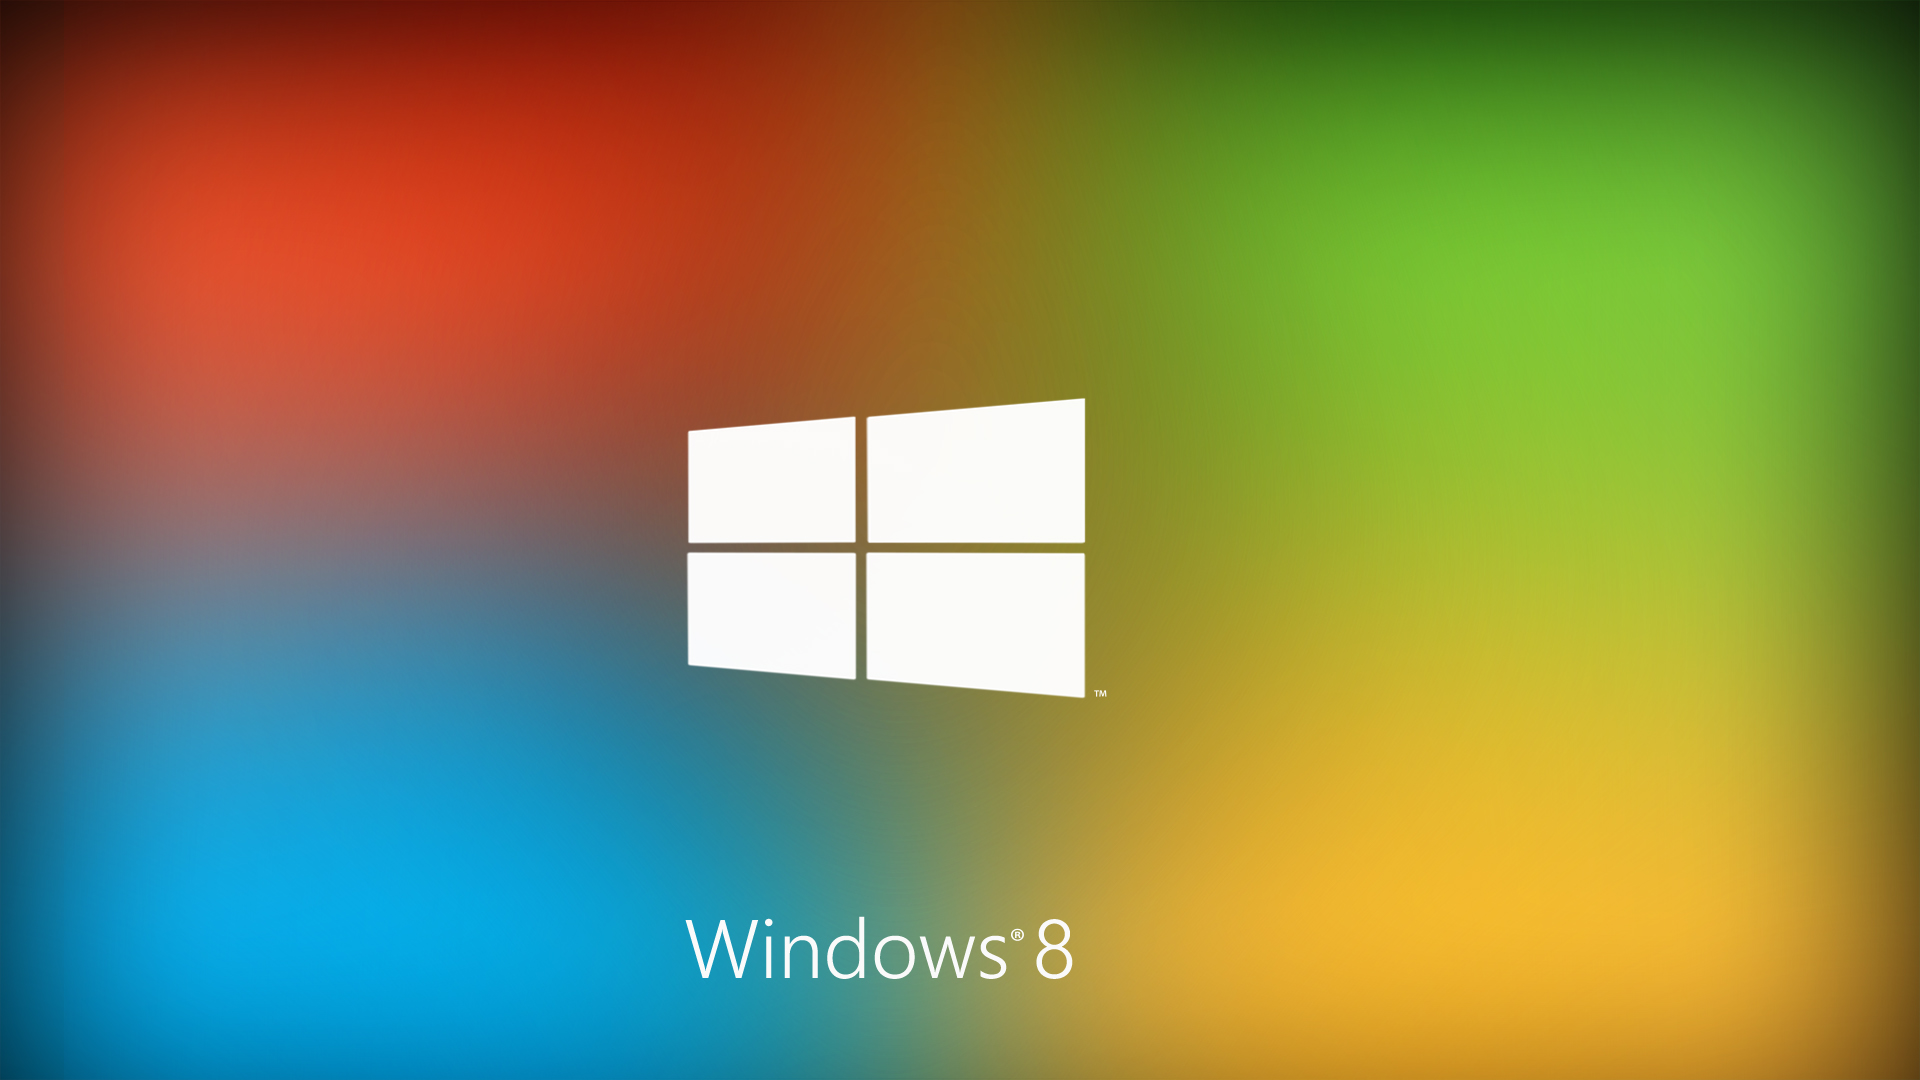 Windows 8 desktop backgrounds 5